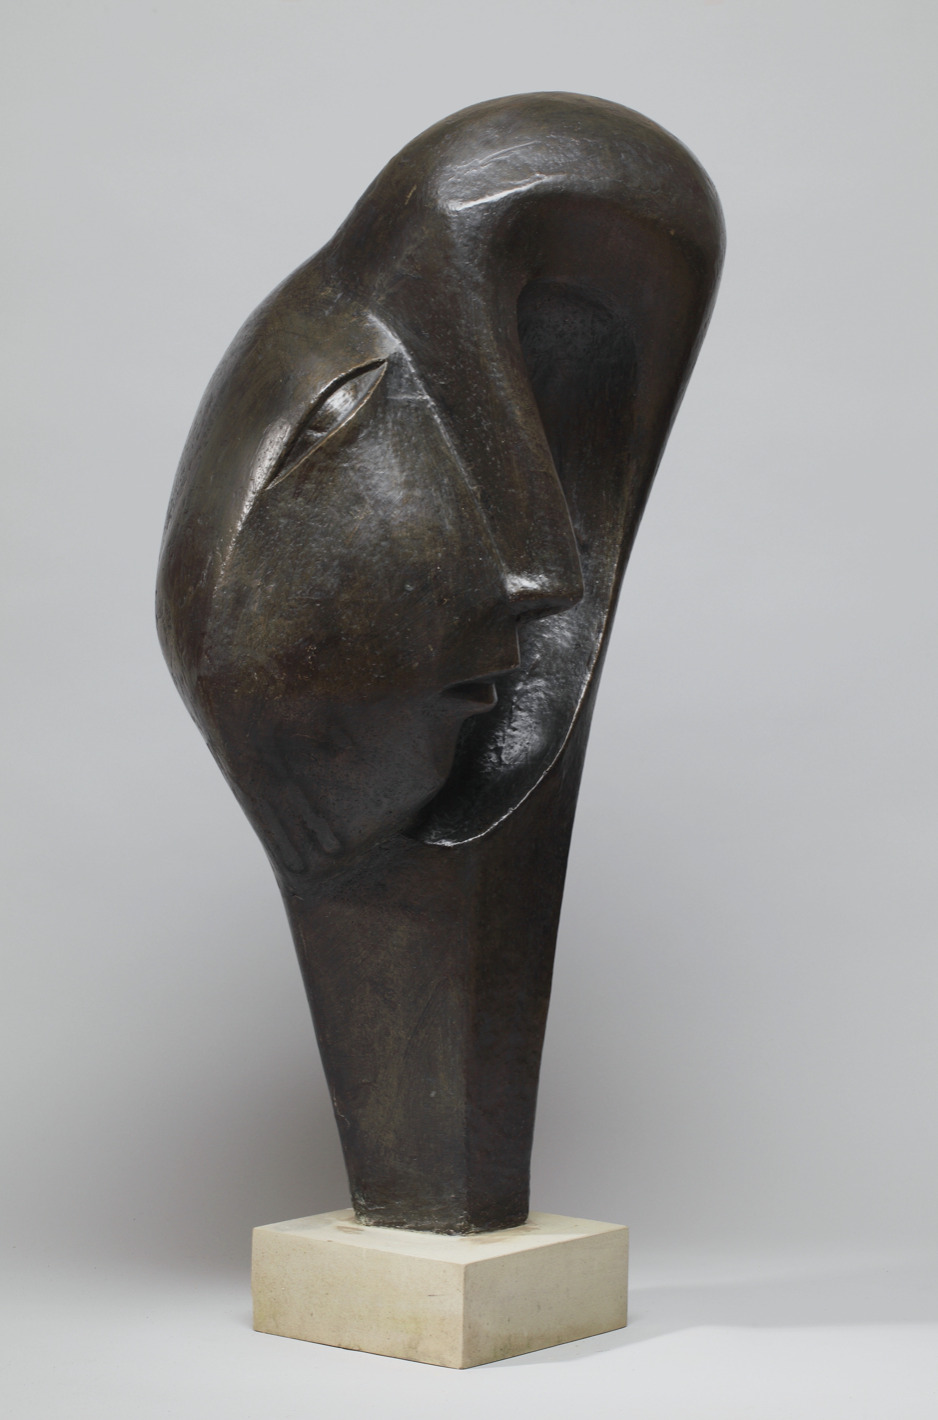 Contemporary abstract bronze sculpture of a head for the garden